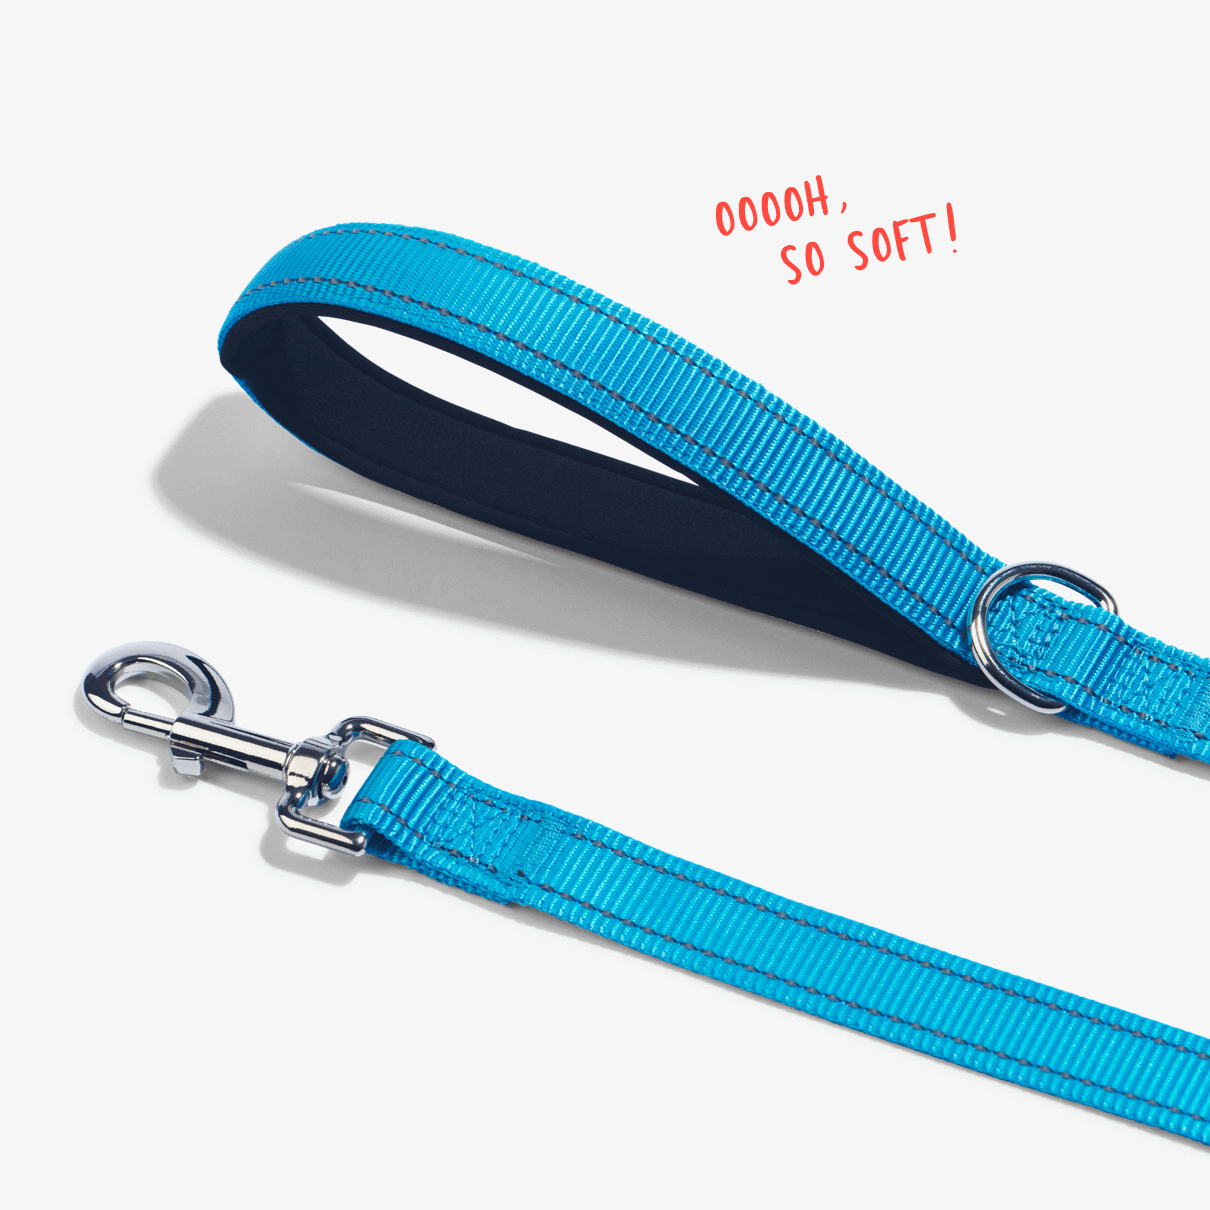 Aqua total control dog leash showing padded handle for comfort